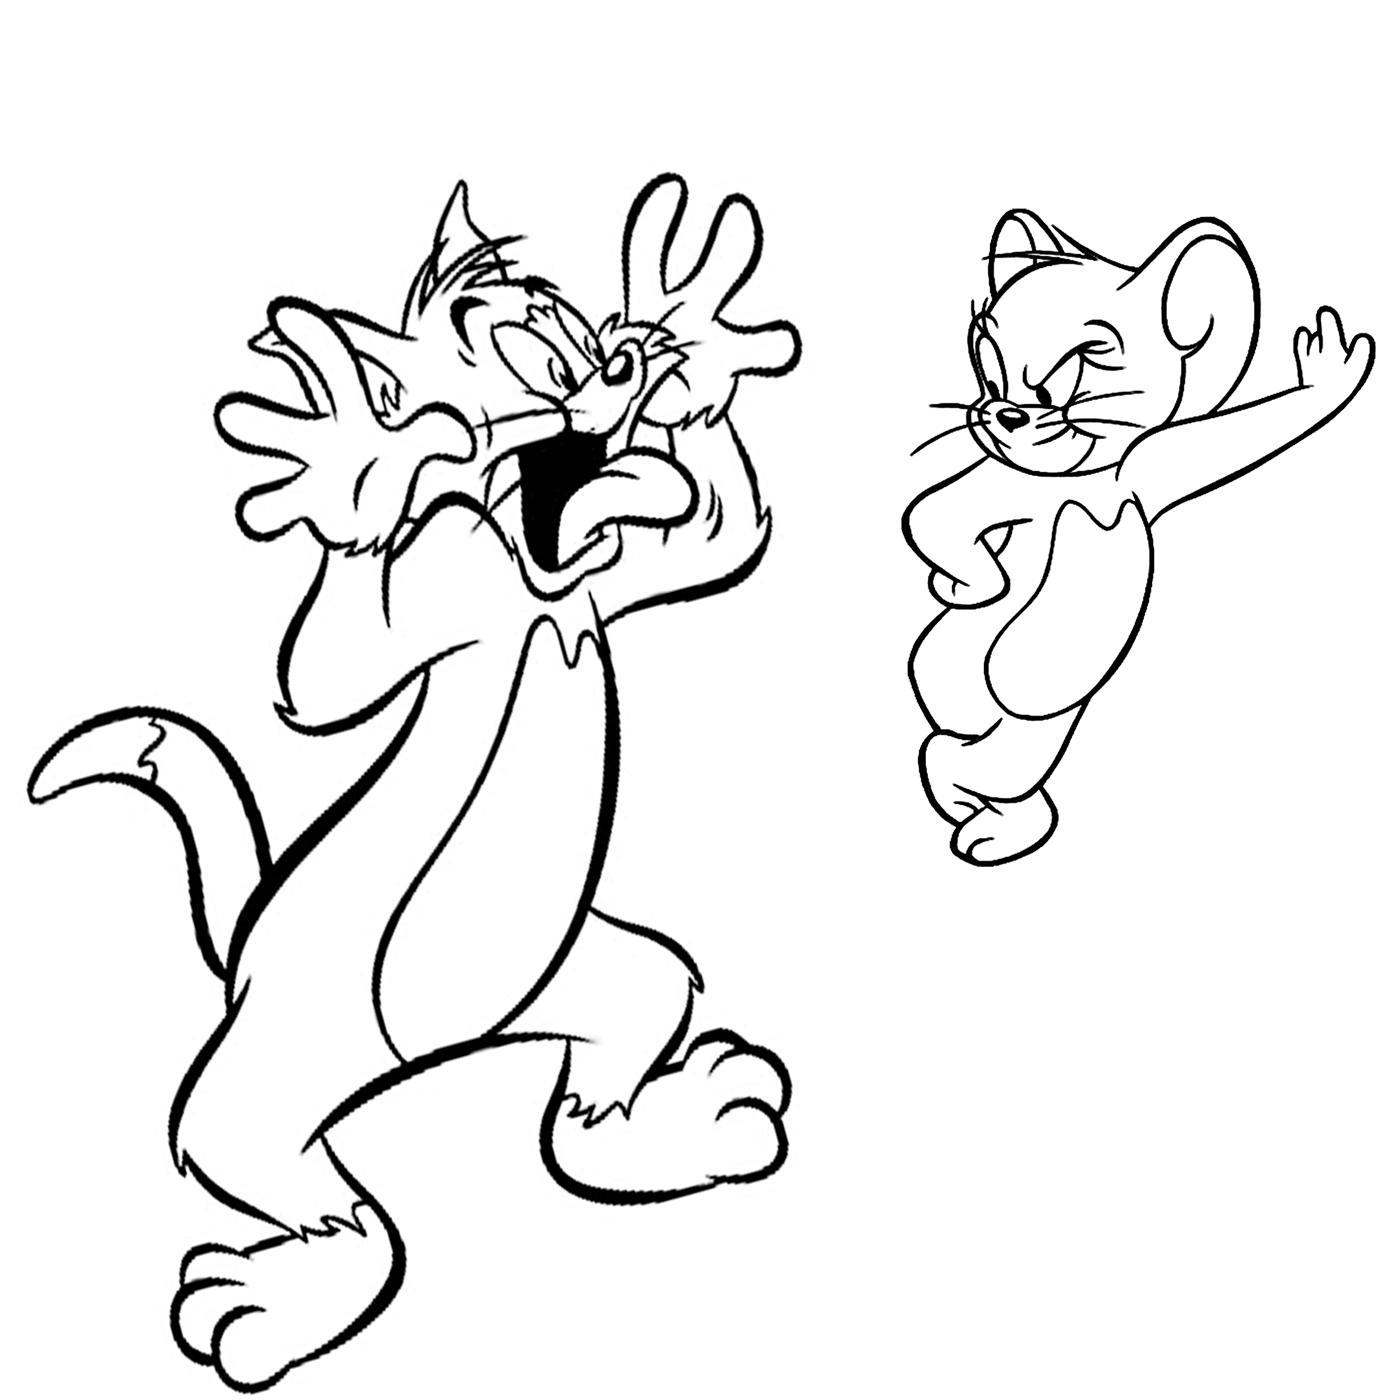 Sketch of Tom and Jerry by syedarafiafatima  Steemit